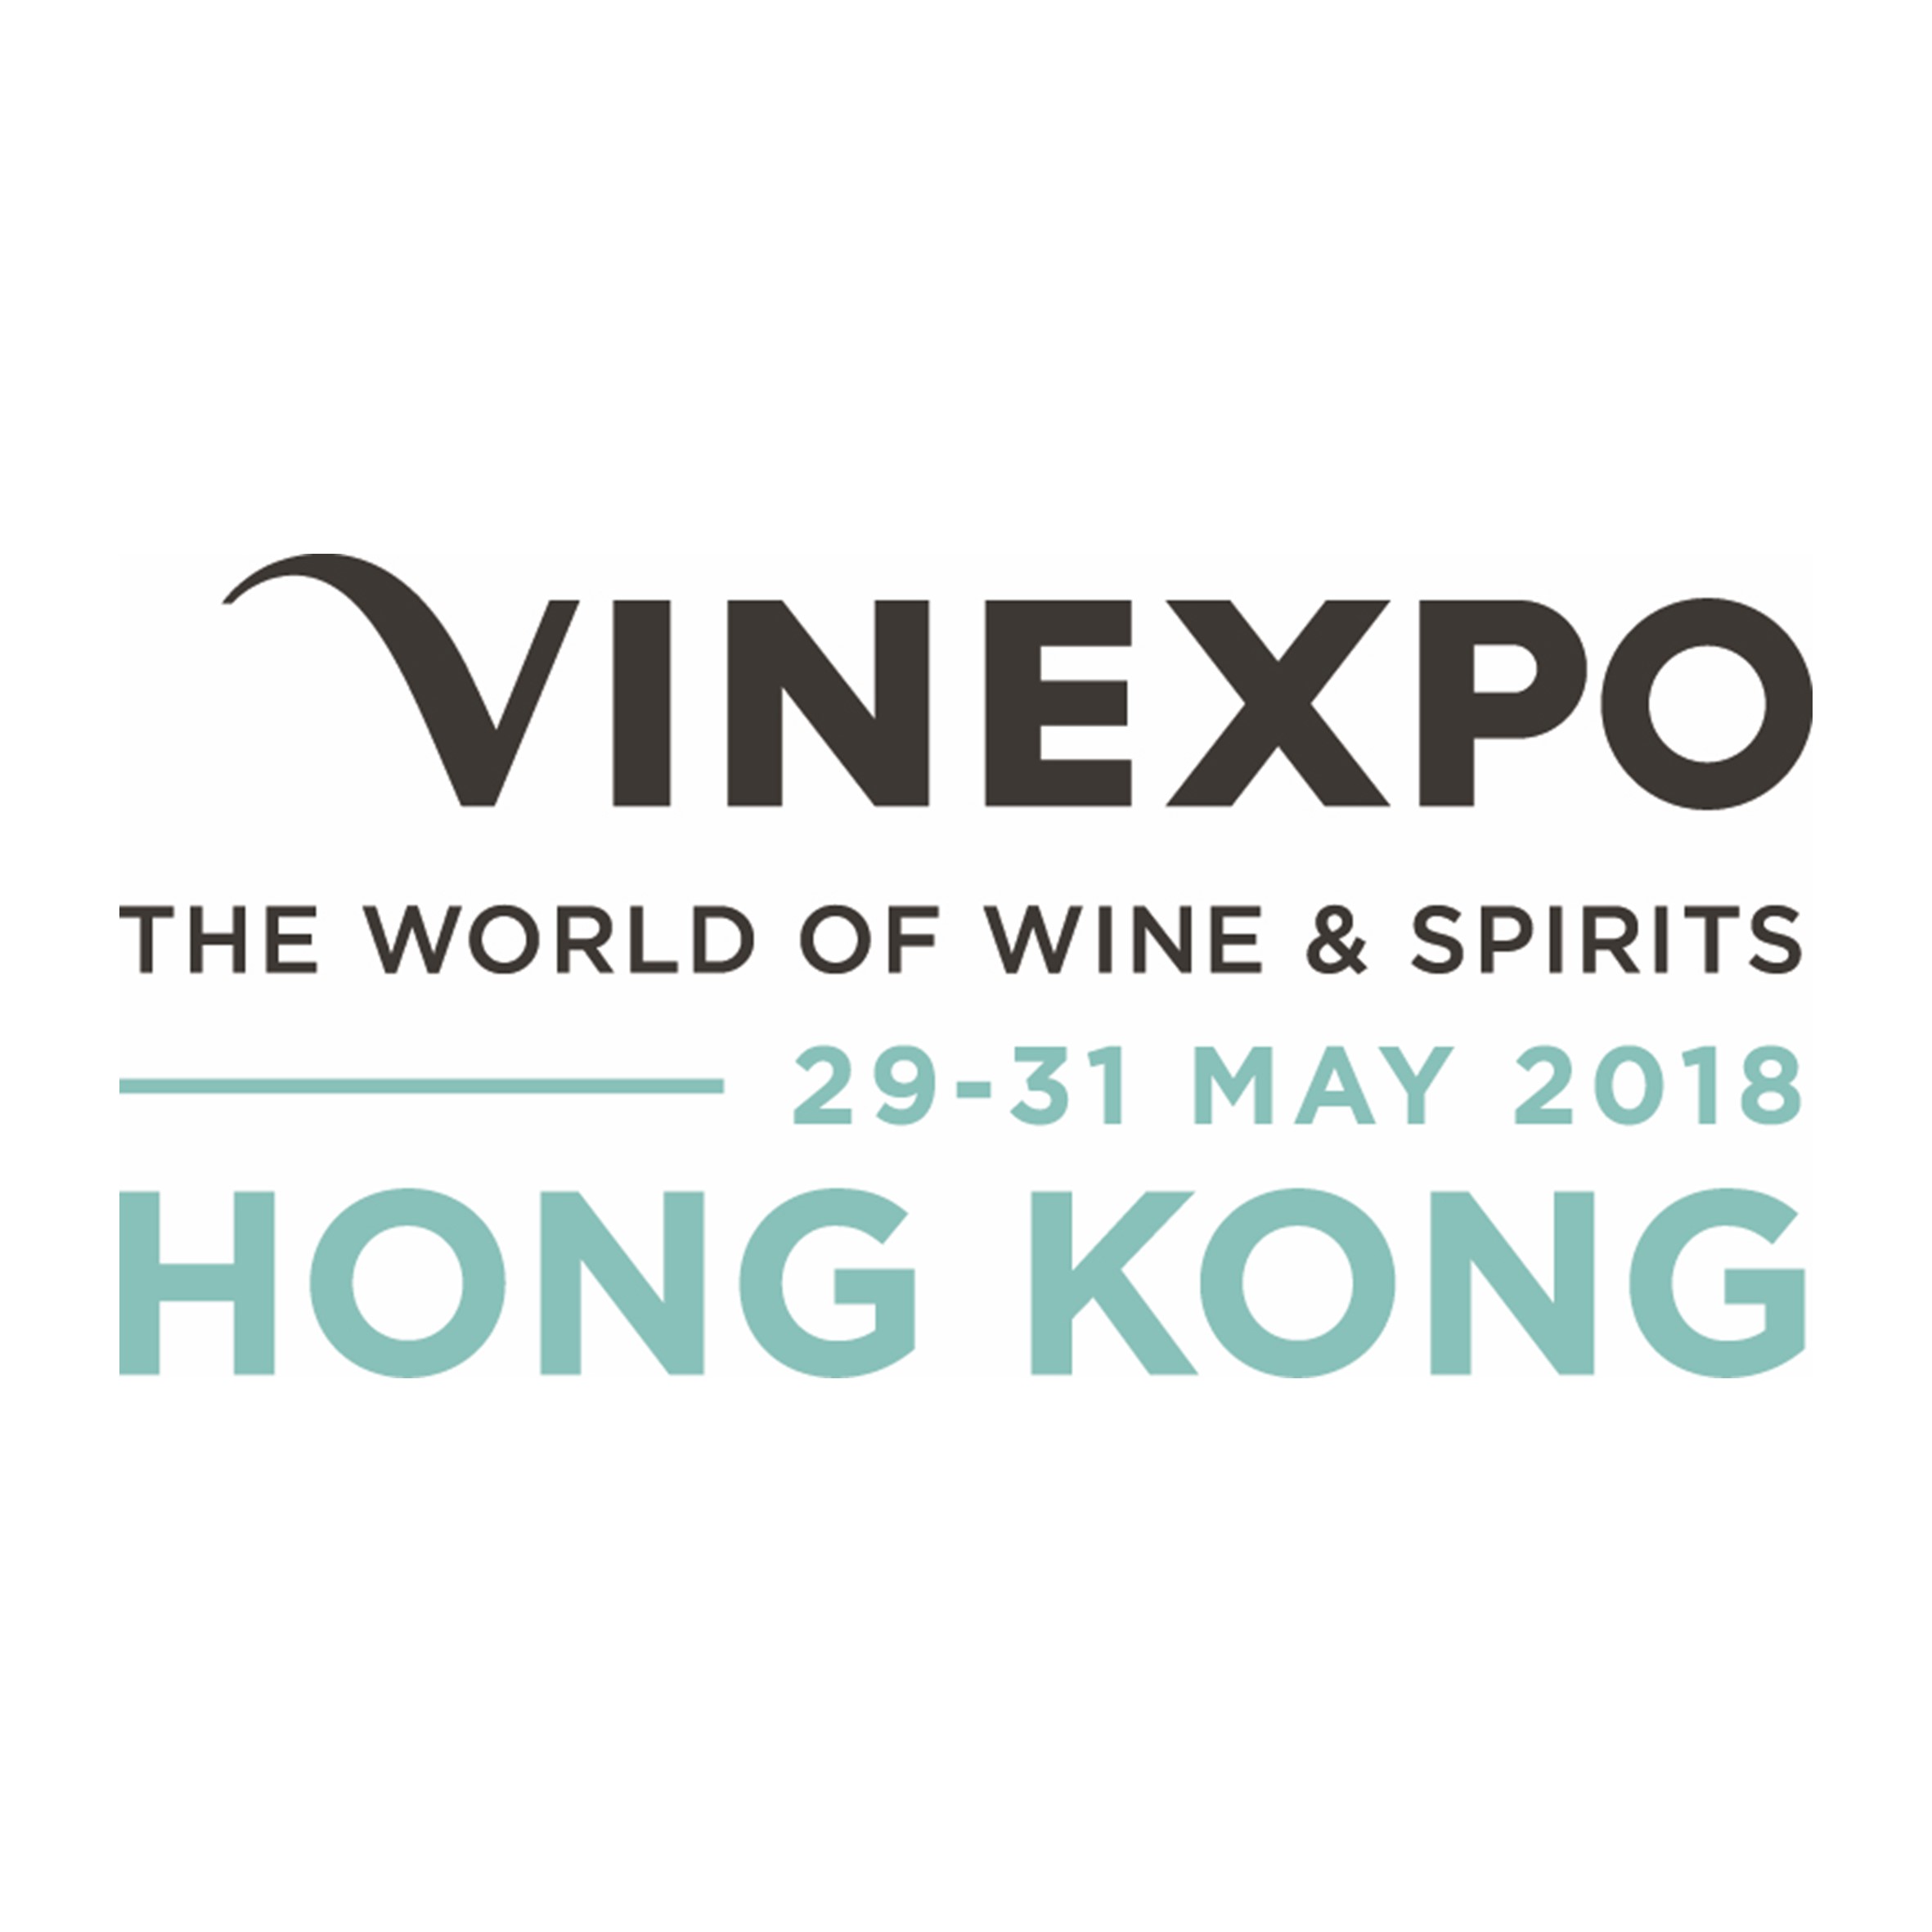 Vinexpo Hong Kong Logo 2018 - Marketing wine during and after COVID-19